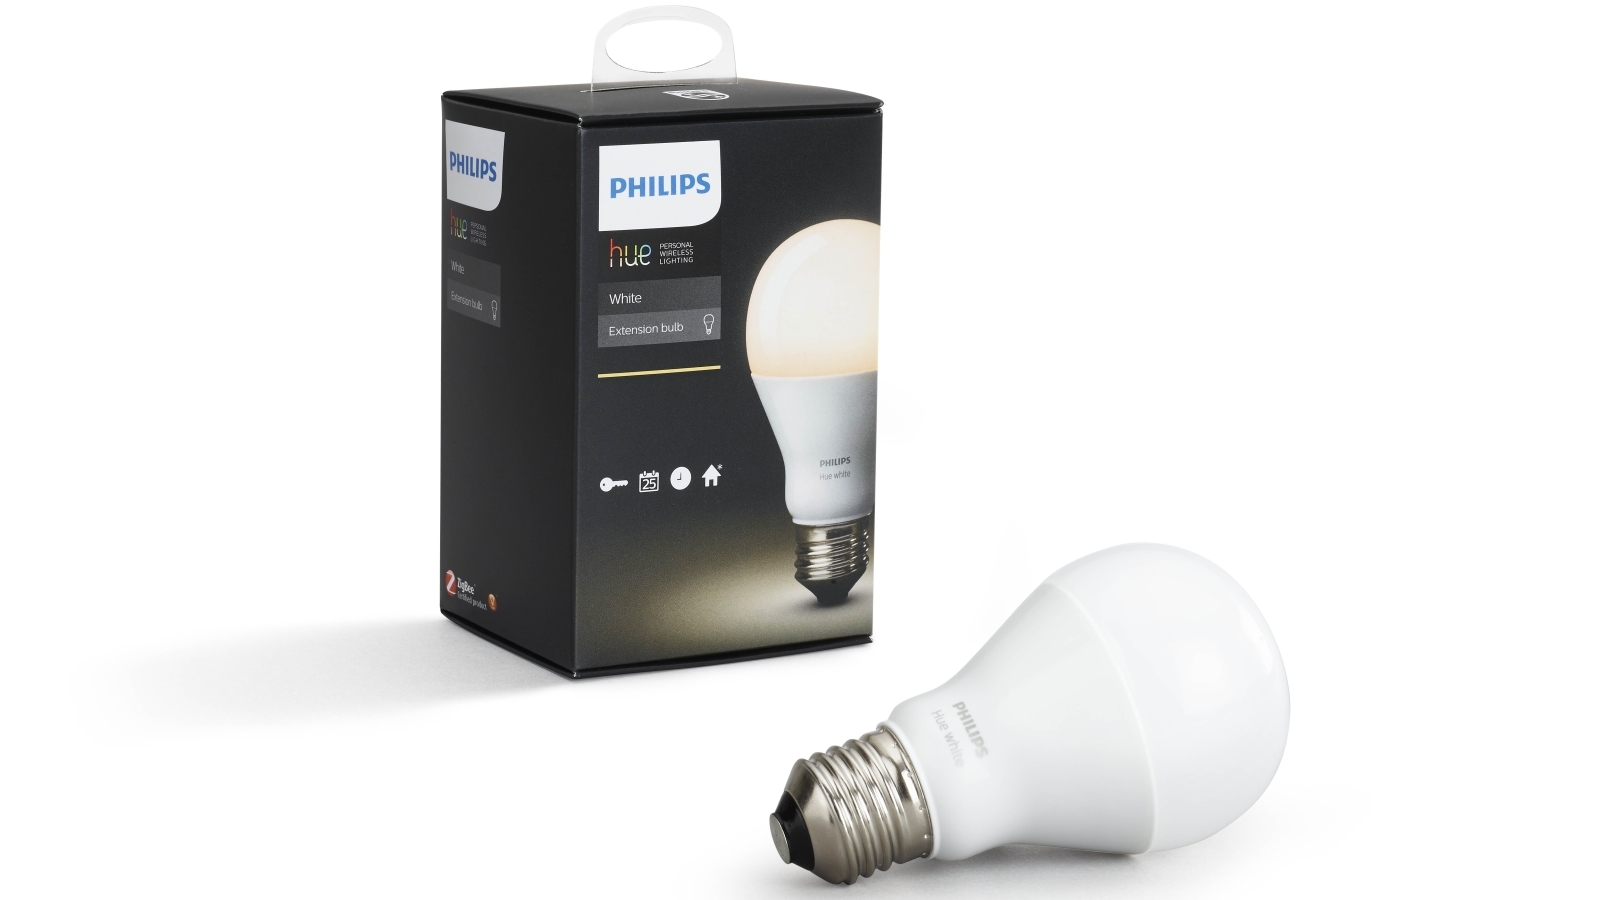 Philips Hue White 9.5W E27 Extension LED Light Bulb | Norman AU